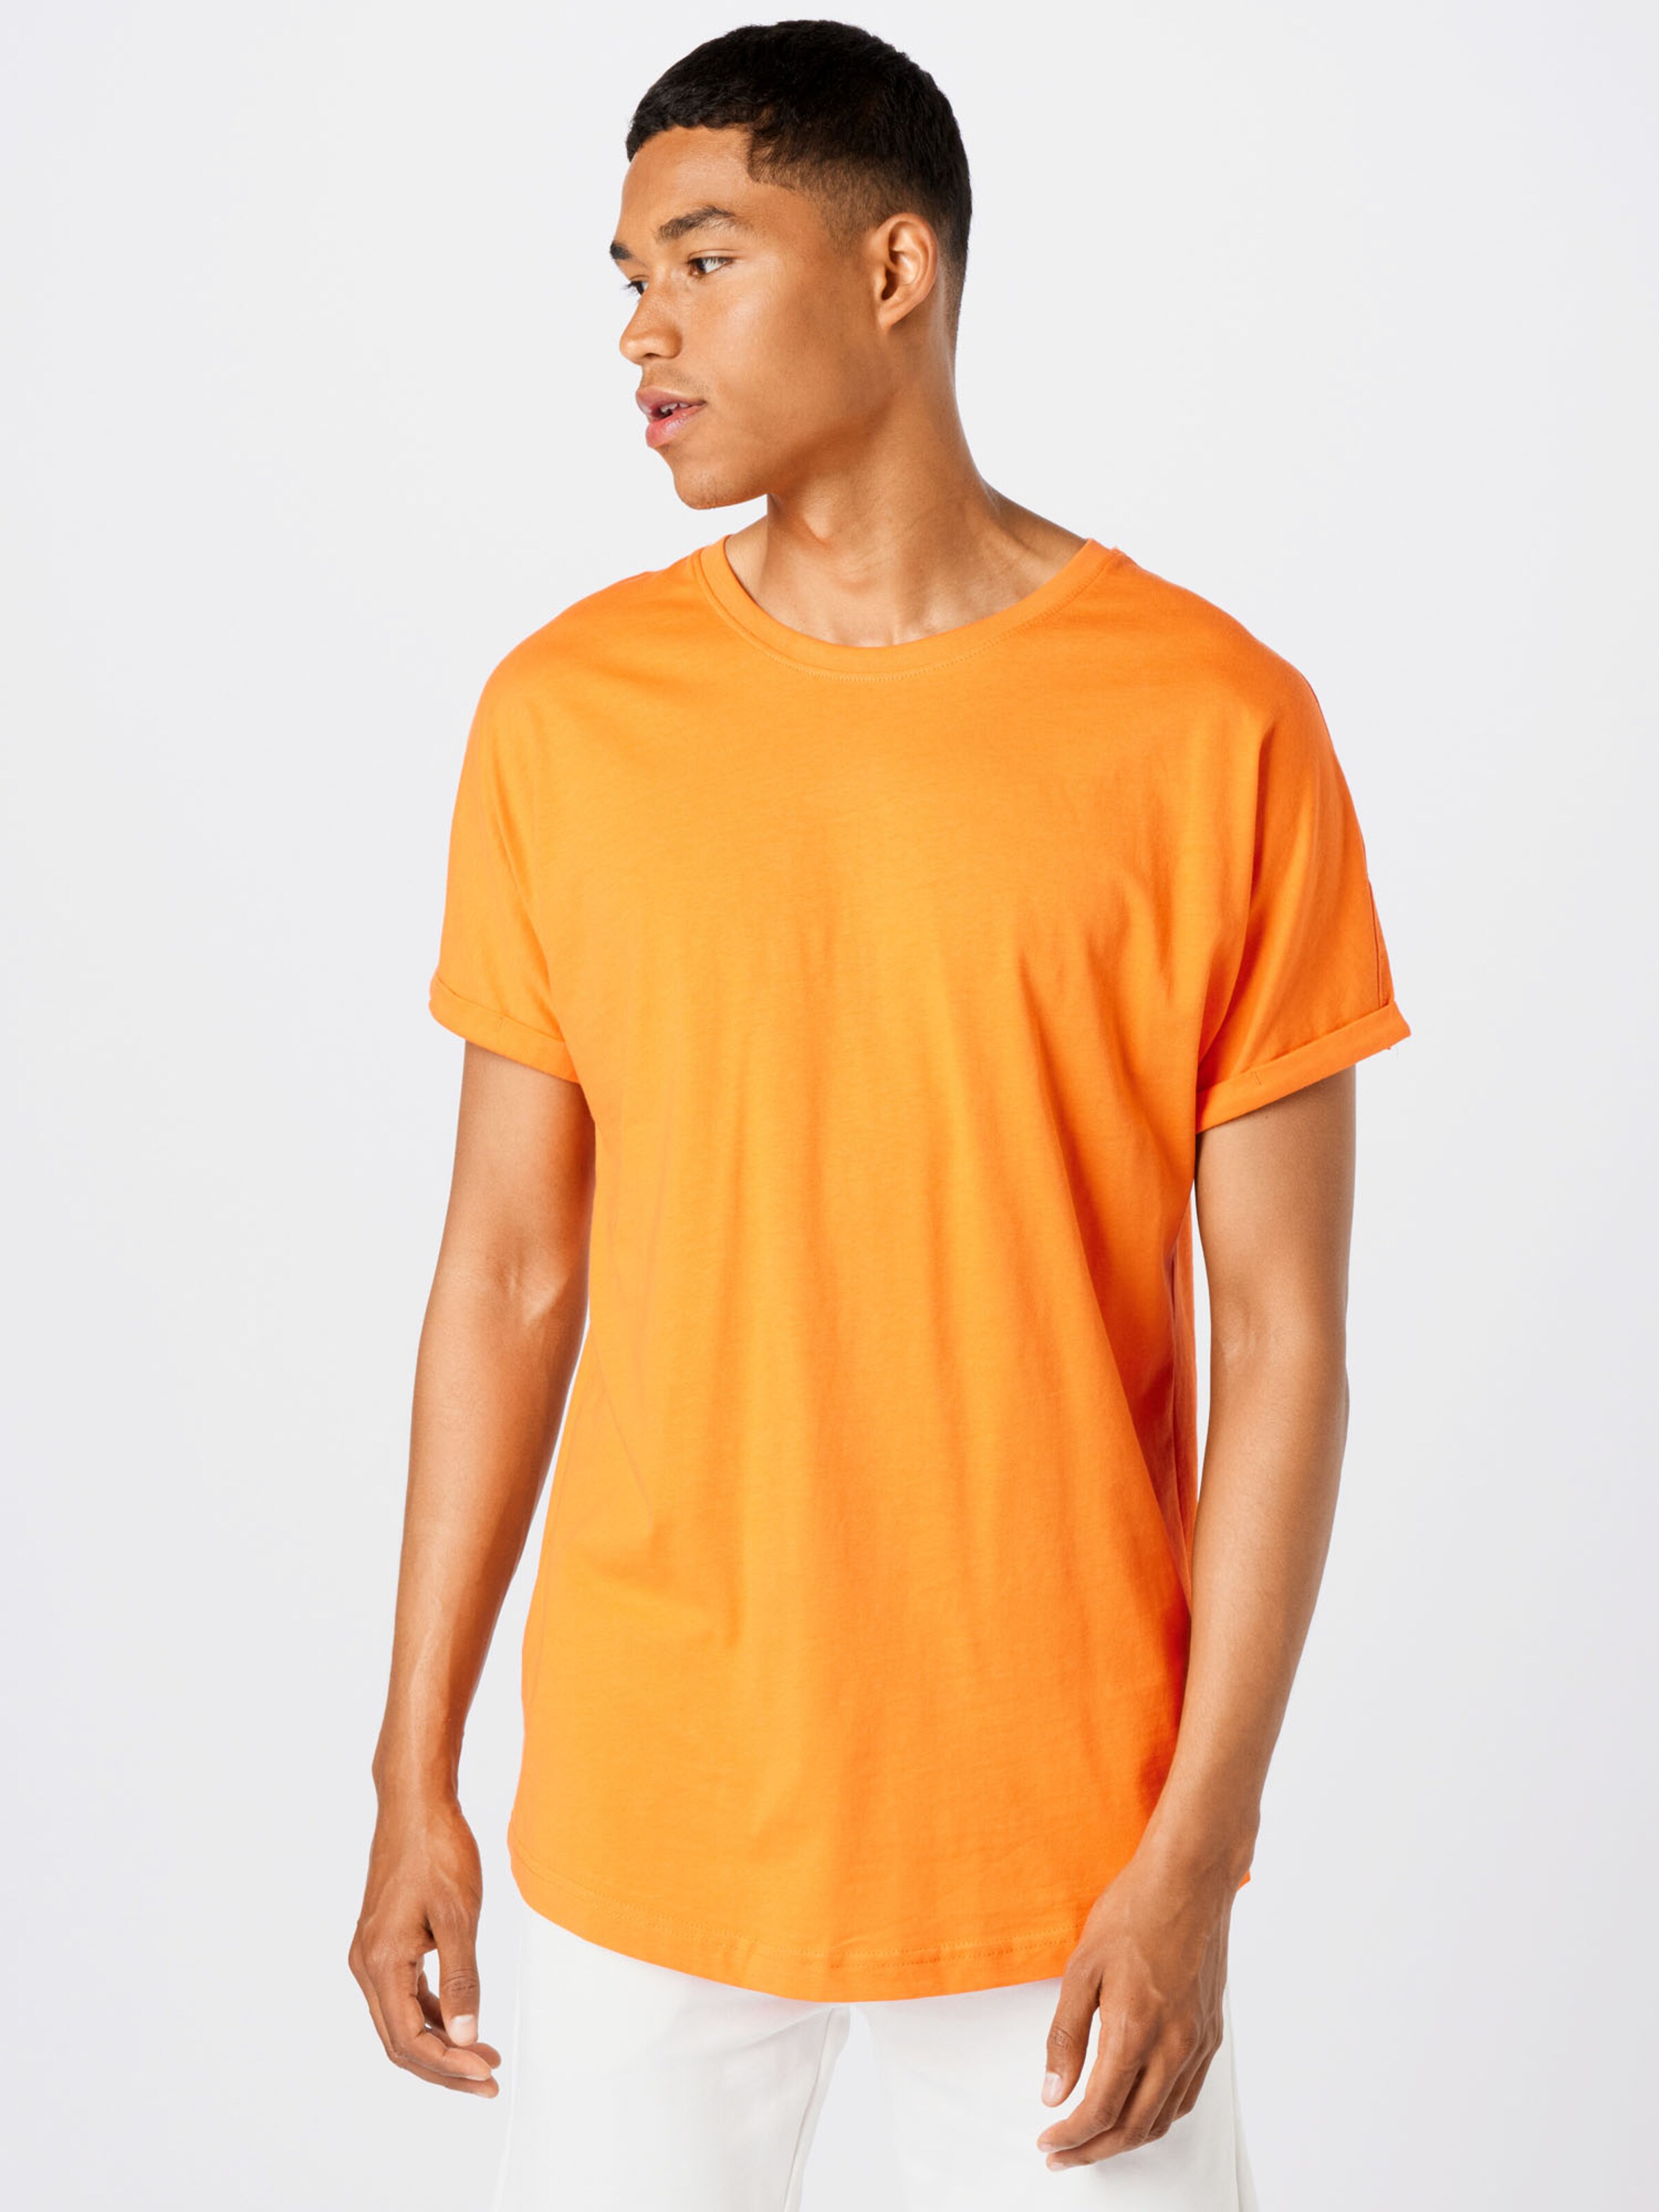 Männer Shirts Urban Classics Shirt in Orange, Weiß - OP33016